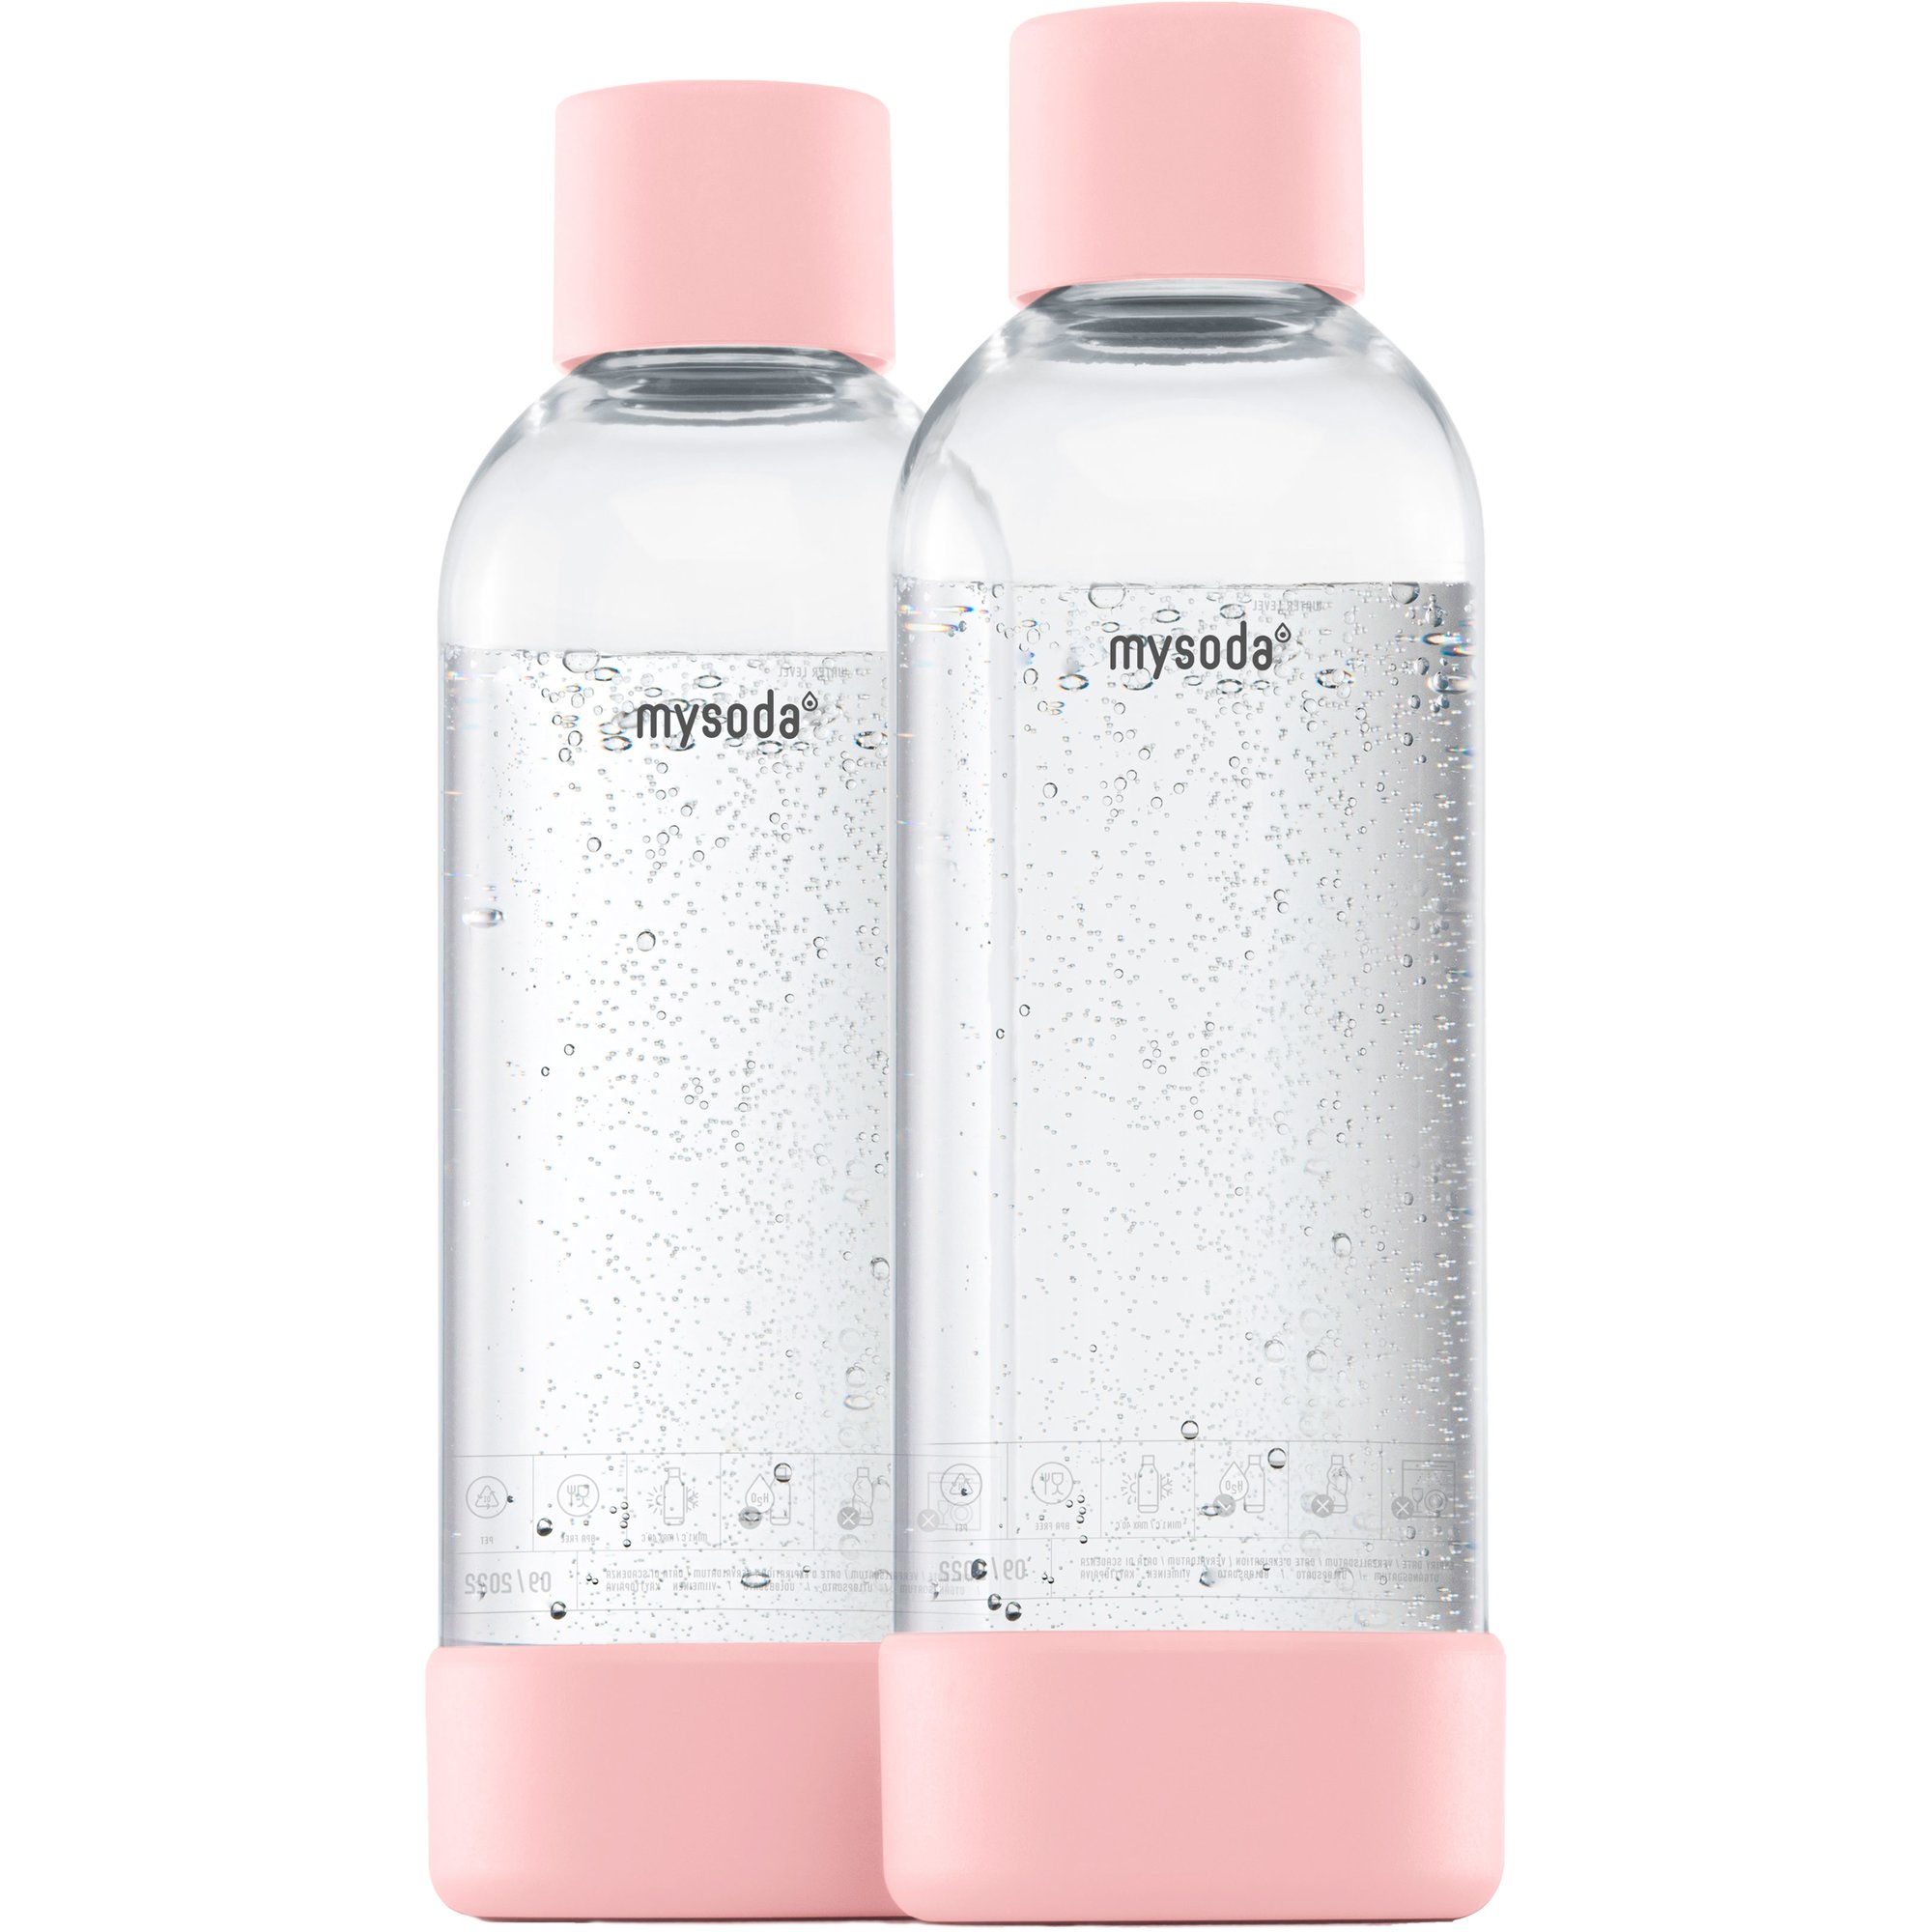 MySoda Vandflaske 1 liter 2 stk. Pink